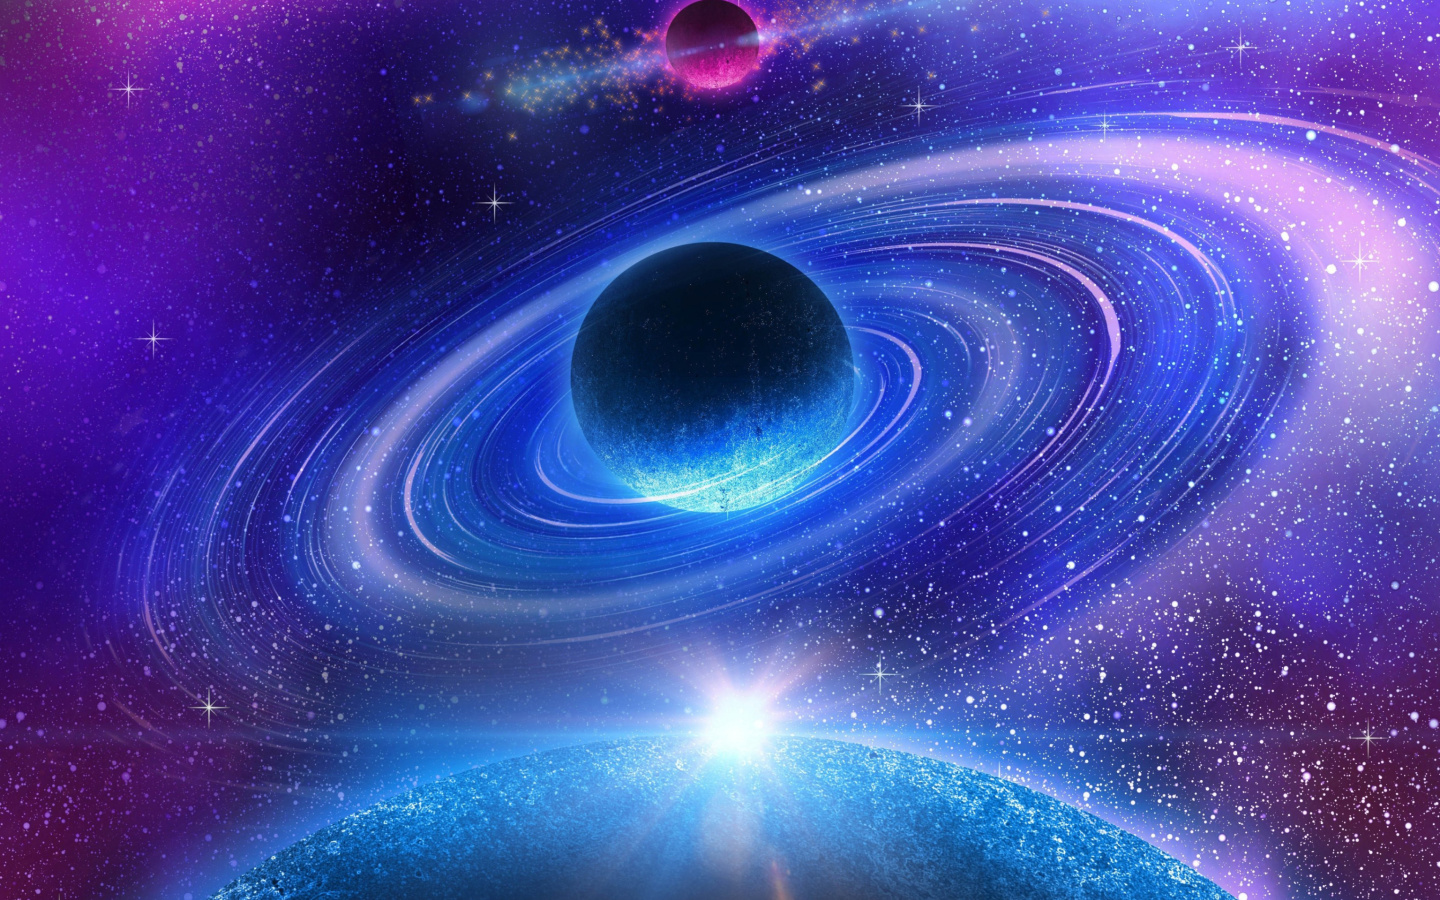 Обои Planet with rings 1440x900